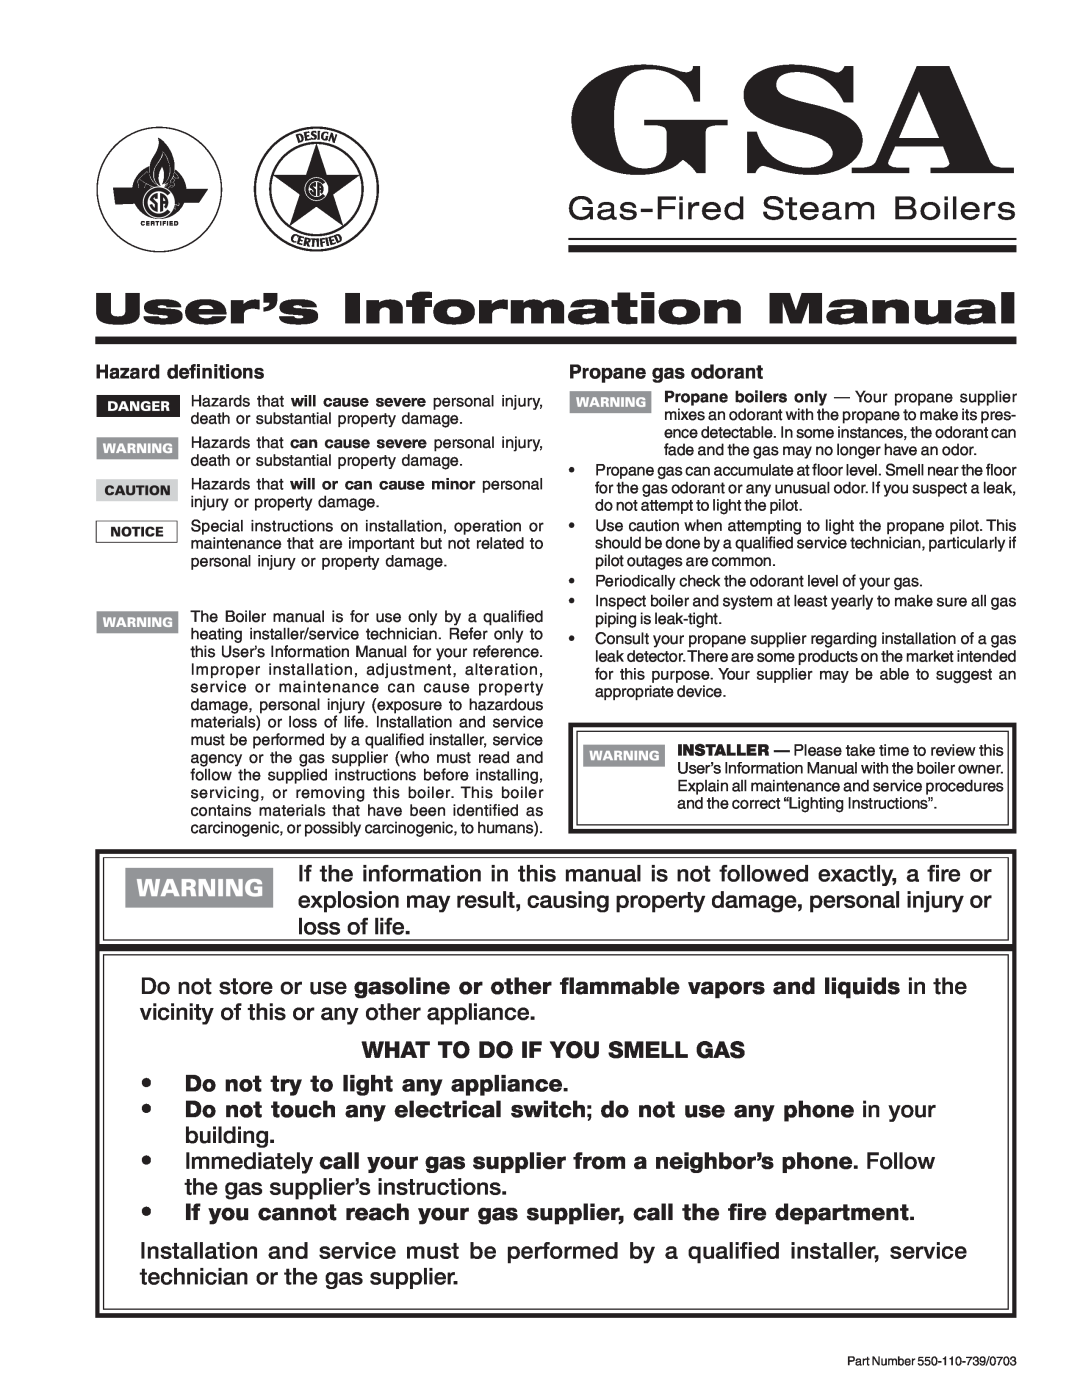 Honeywell RVGP manual G Sa, User’s Information Manual, Gas-Fired Steam Boilers 